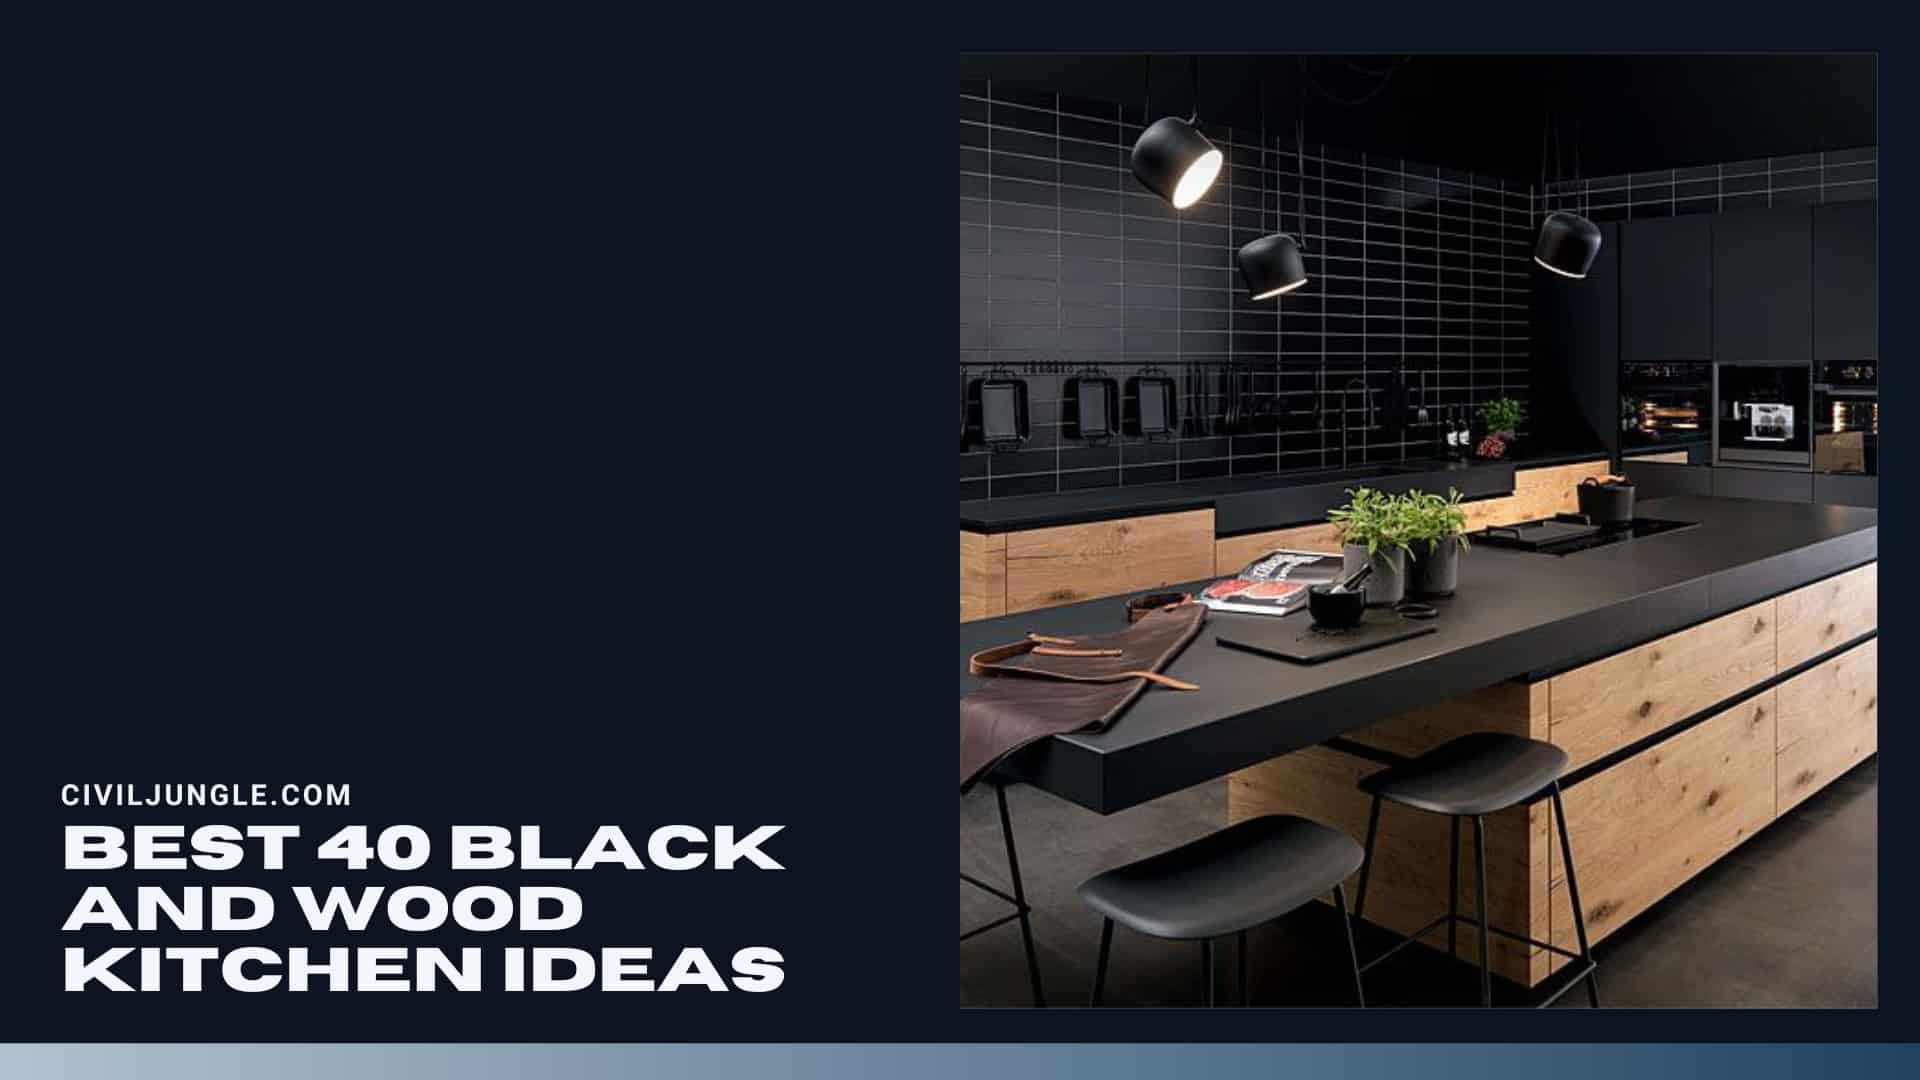 Best 40 Black and Wood Kitchen Ideas